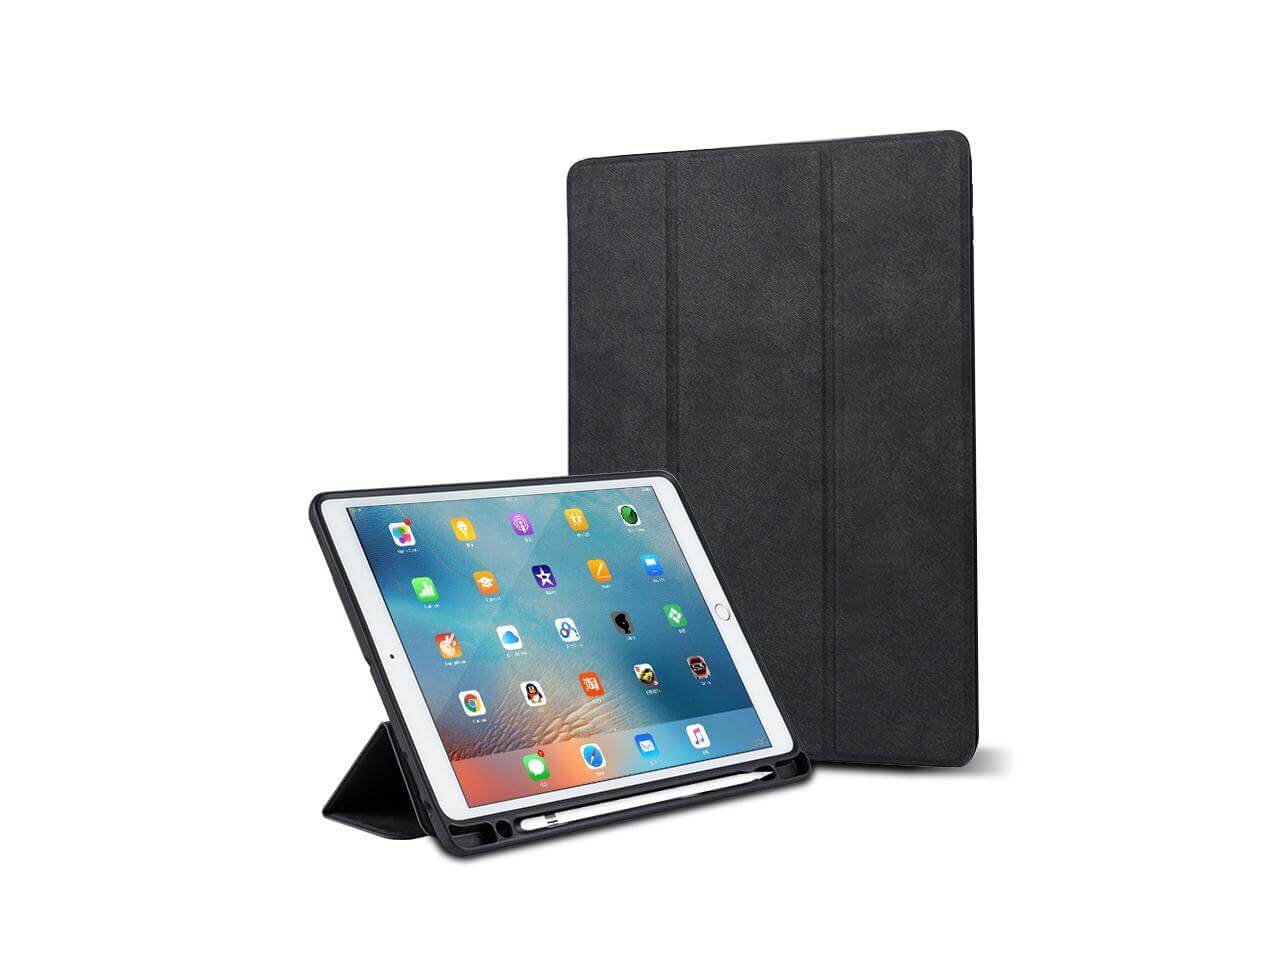 iPad Pro 12.9 Inch 2015/2017 Smart Cover With Pen Slot Folding Folio Case Cover